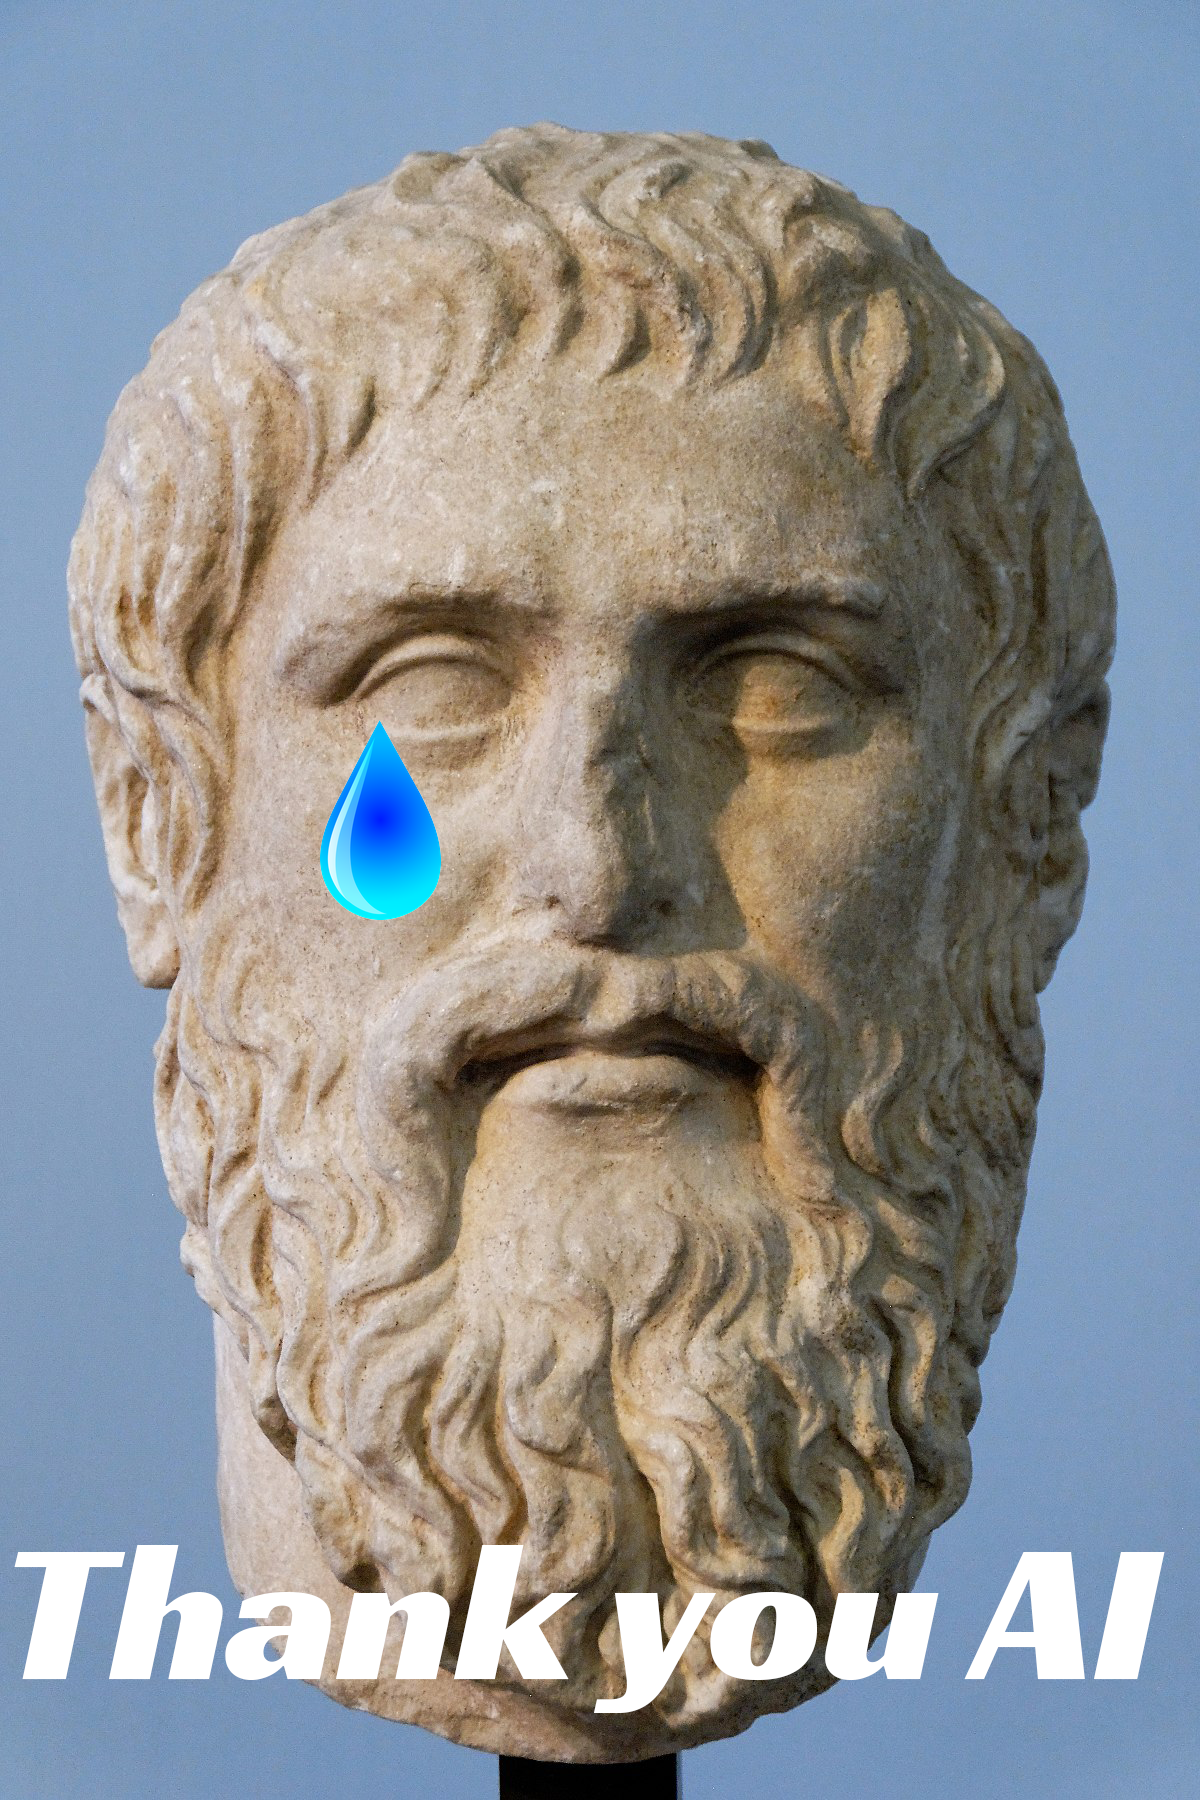 You made Plato happy